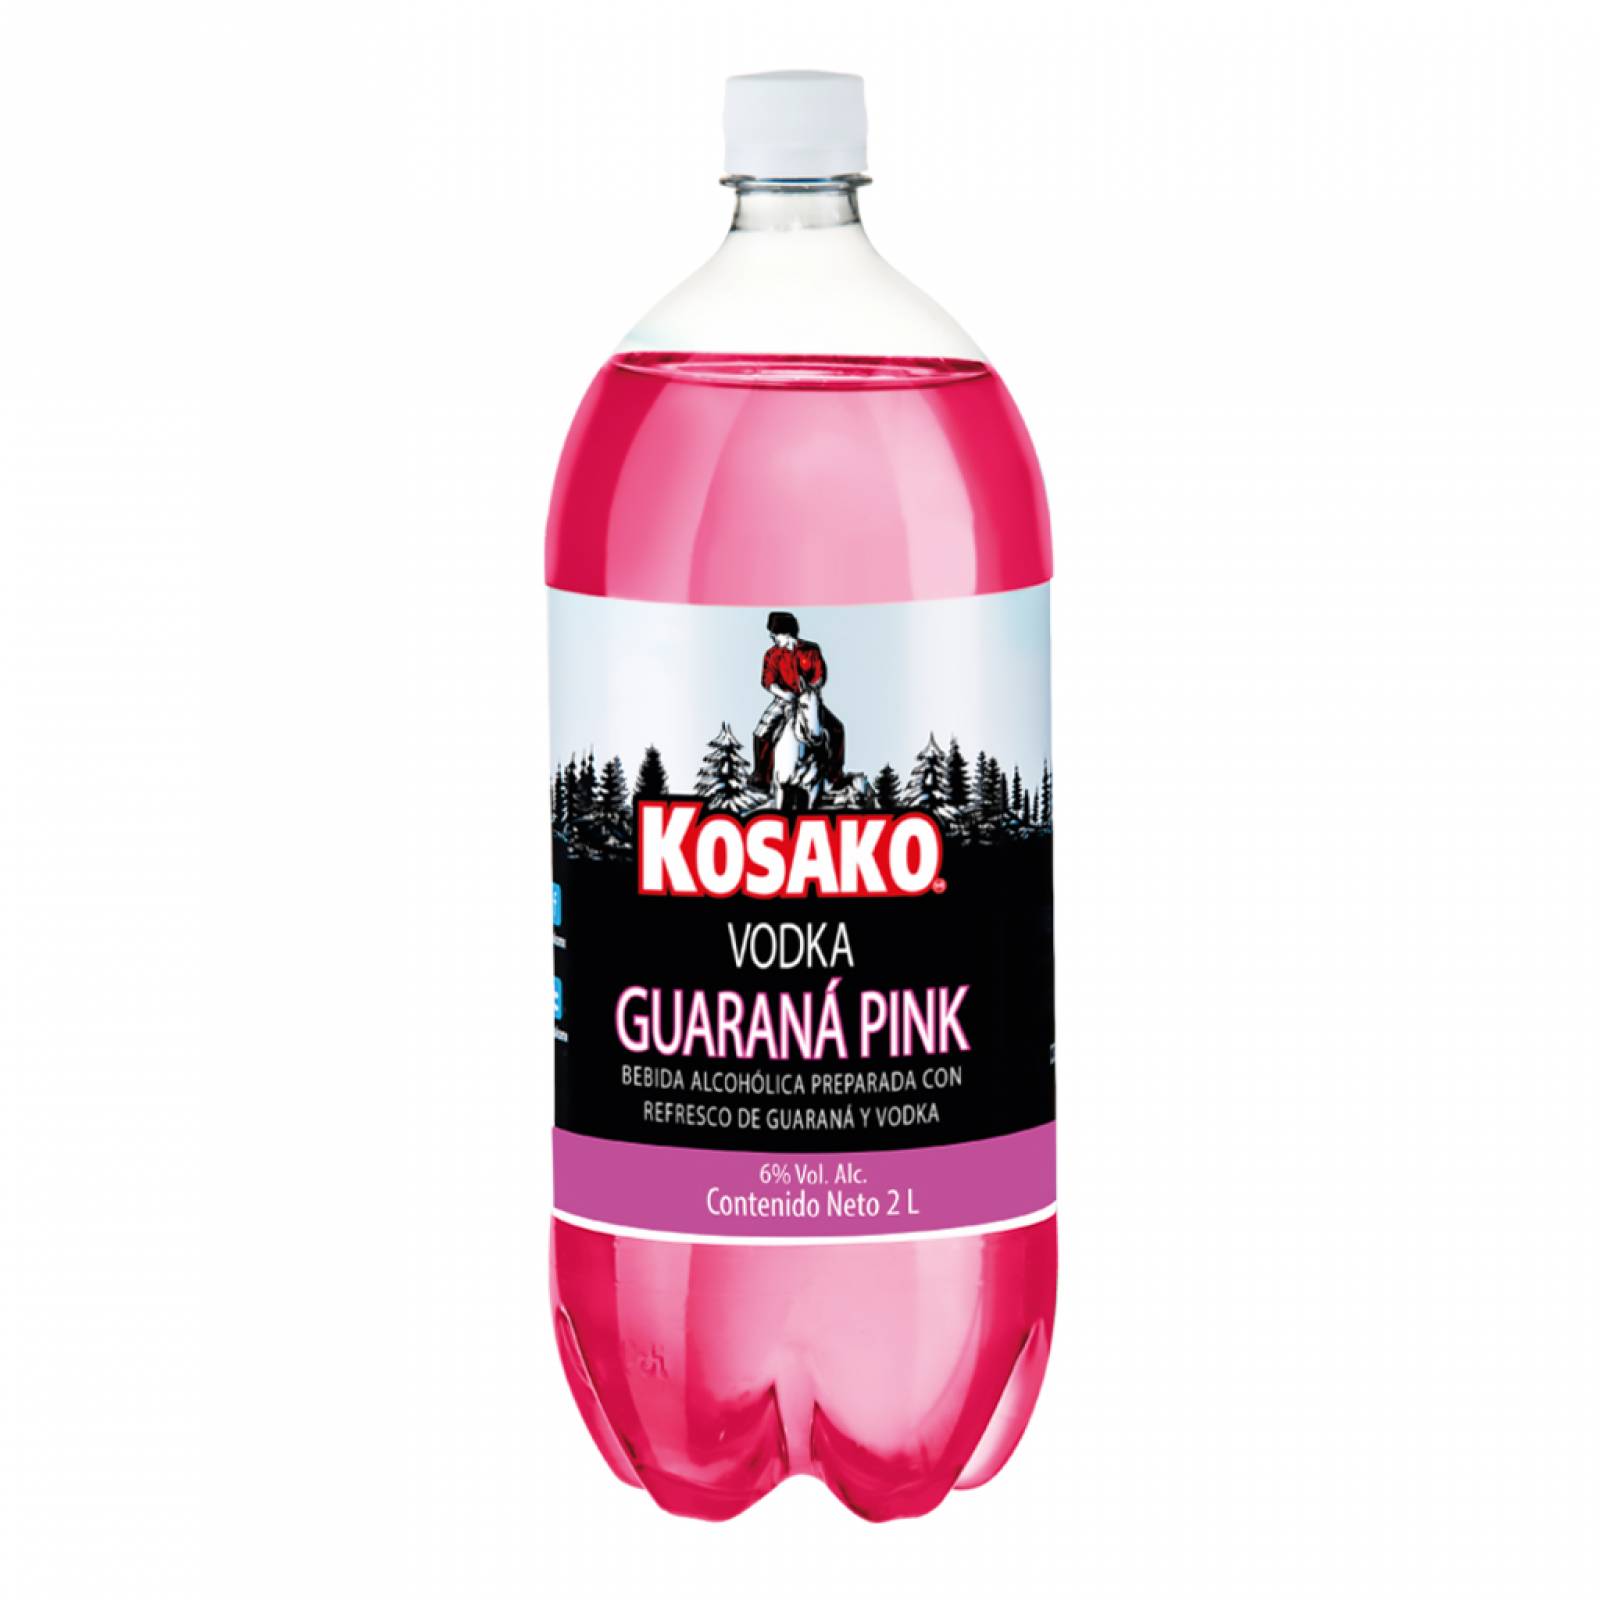 Vodka Guaraná Pink Kosako Botella 2 lt